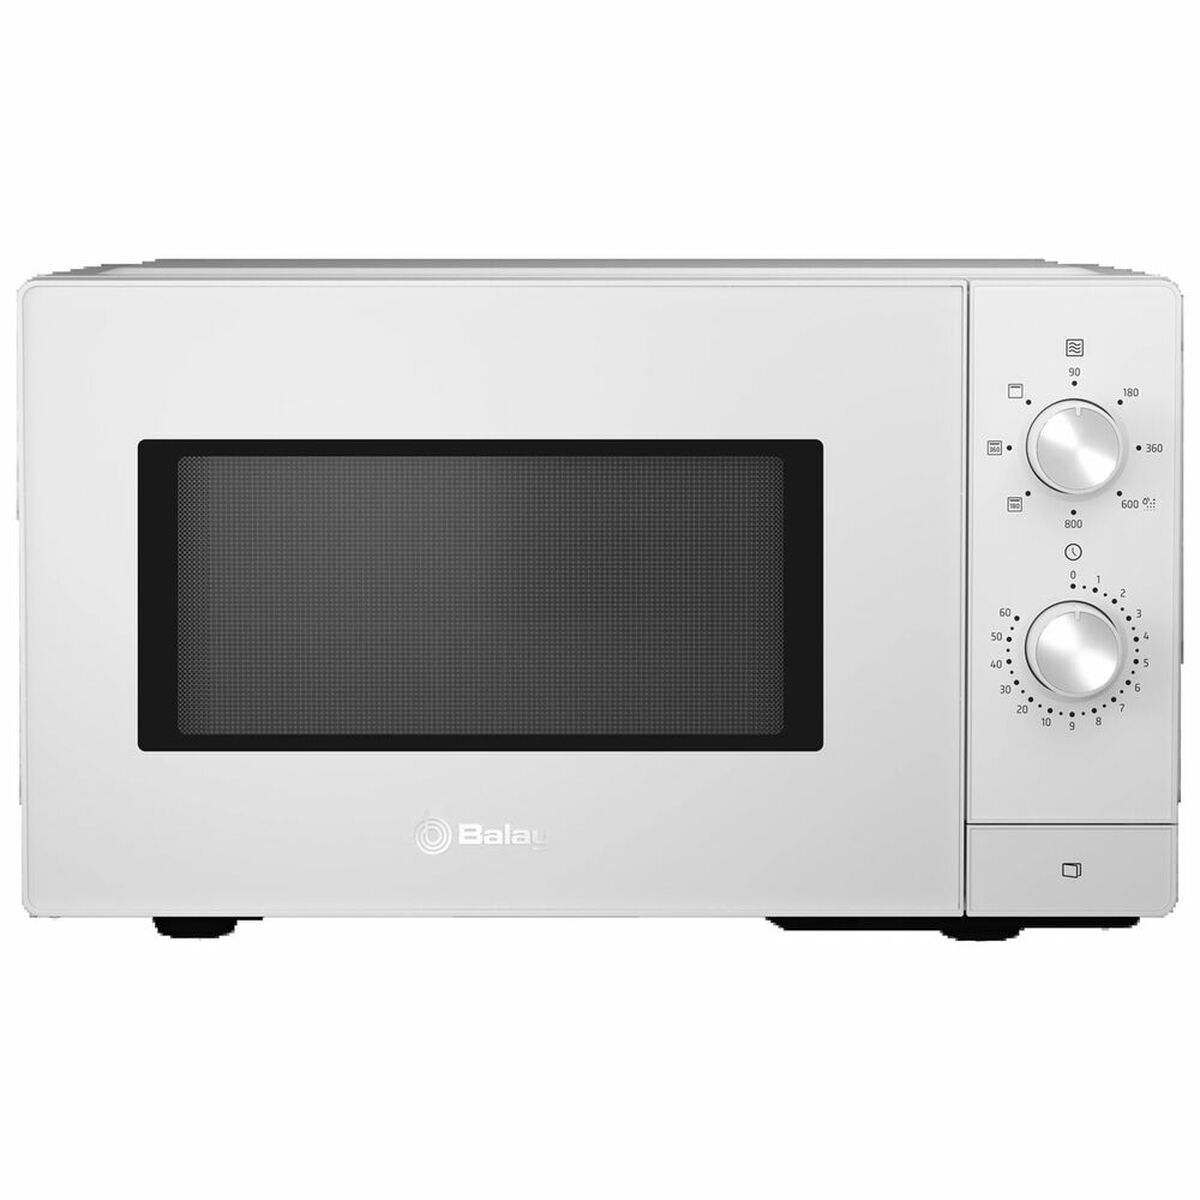 Microwave with Grill Balay 3WG3112B0 800W 20L White